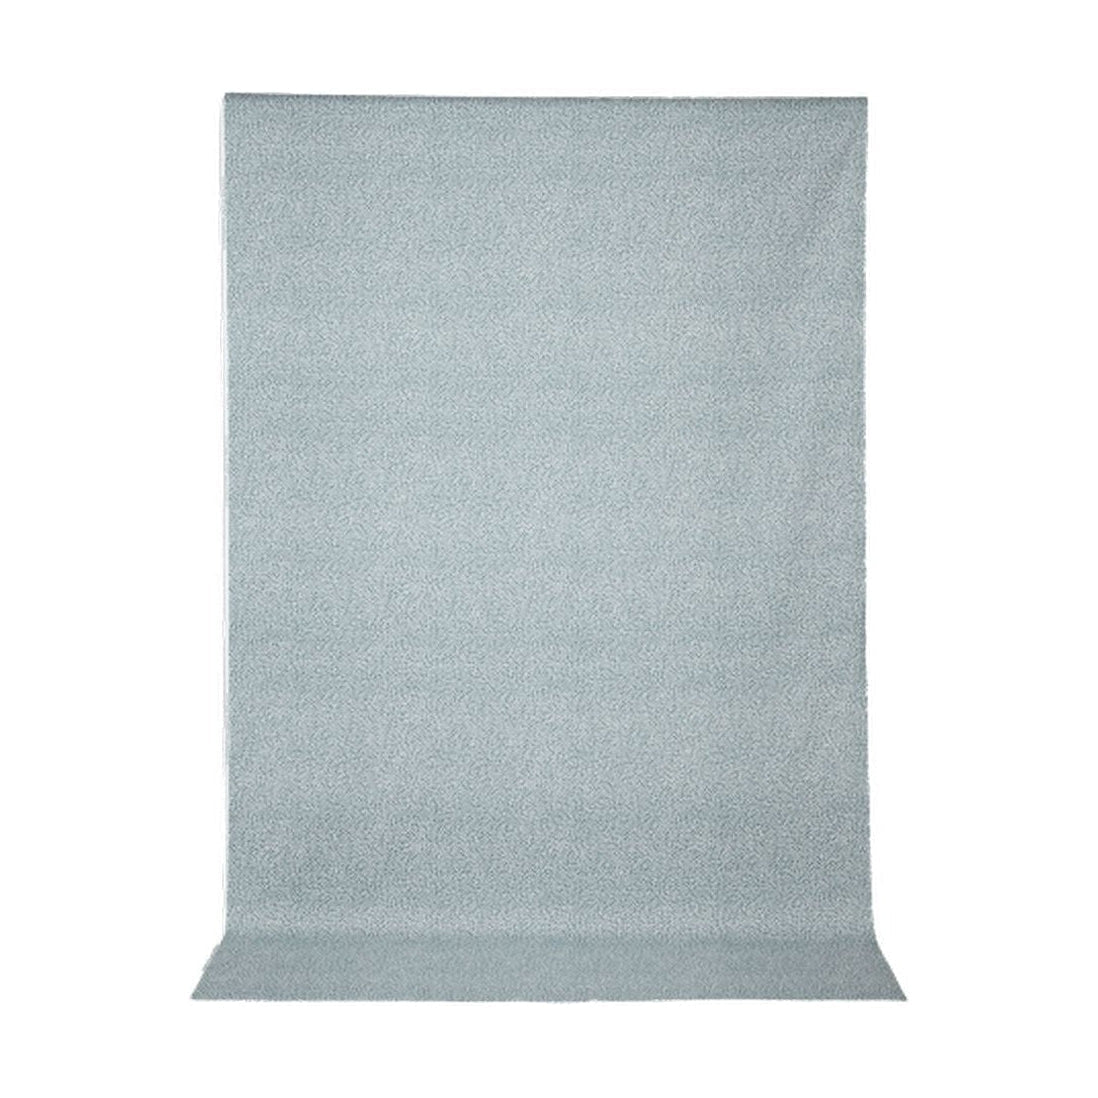 Spira Dotte Fabric Ancho 150 cm (precio por metro), azul ahumado